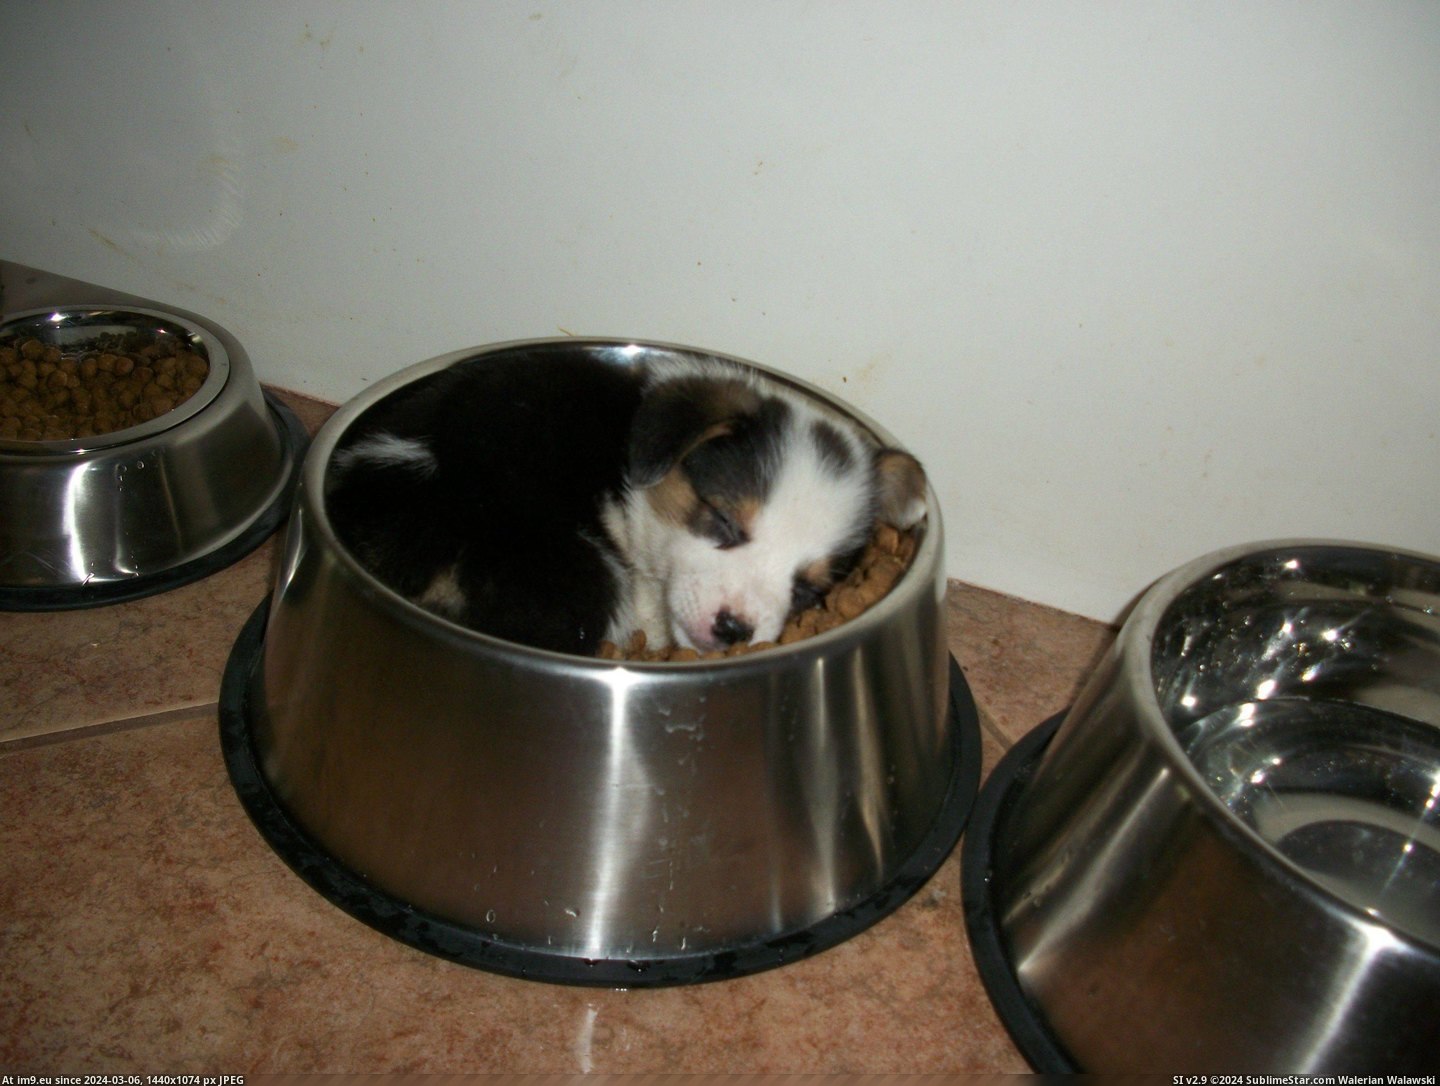 #Sleeping  #Bowl [Aww] Sleeping in a bowl Pic. (Bild von album My r/AWW favs))